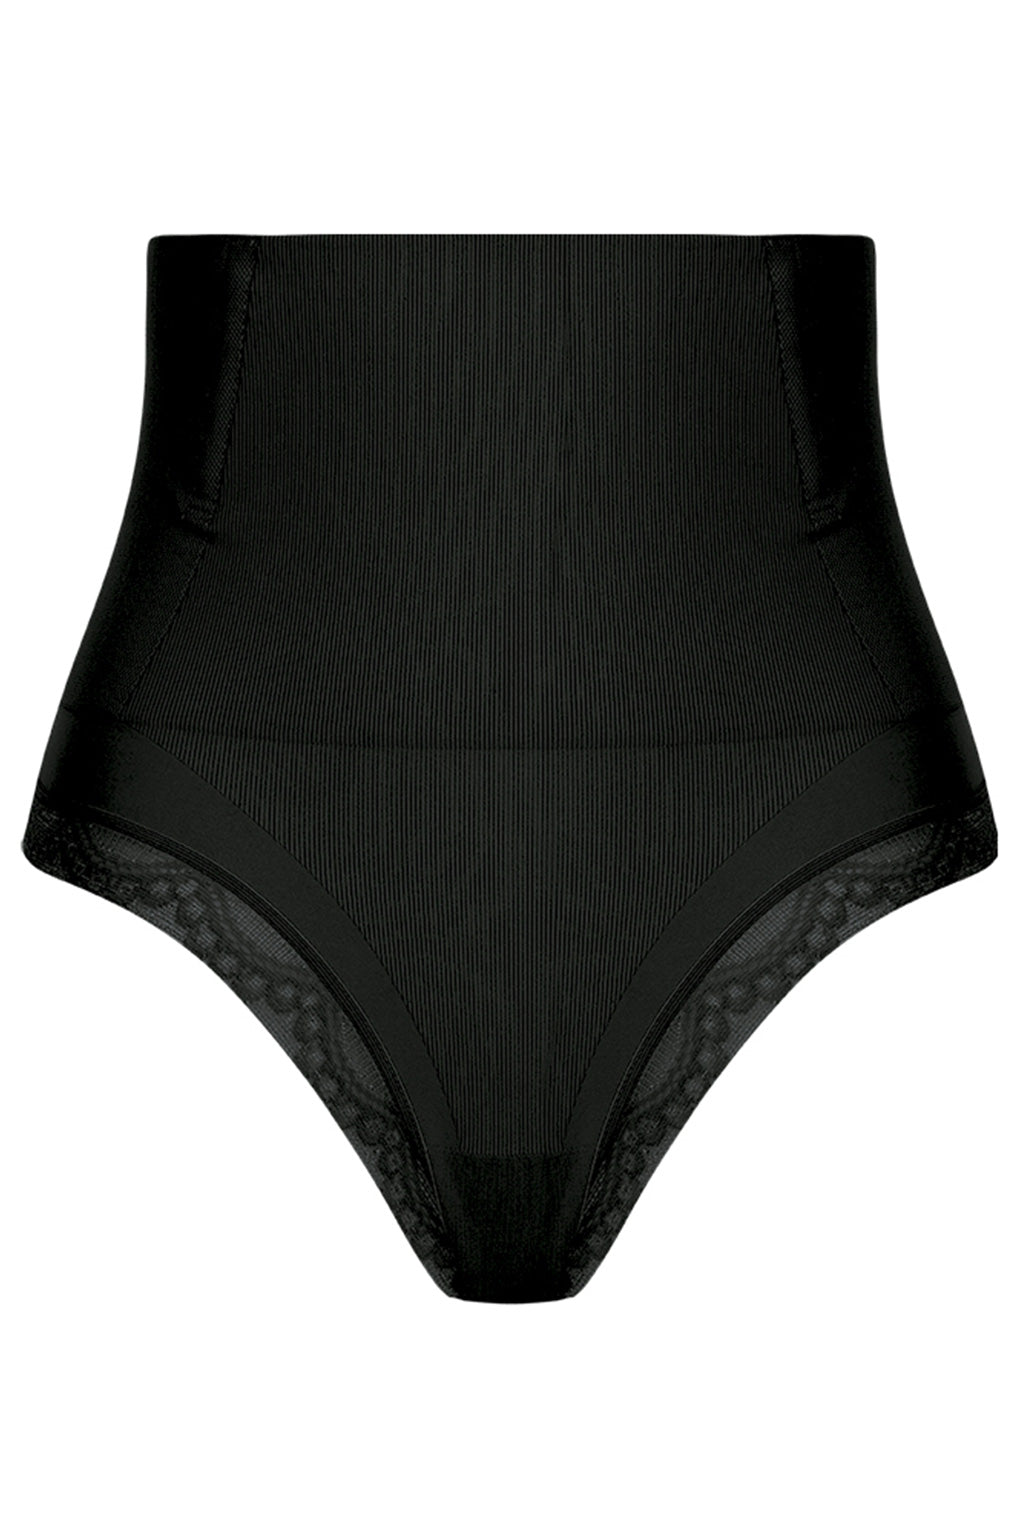 Brazilian waist corset panty design for waist and hips l